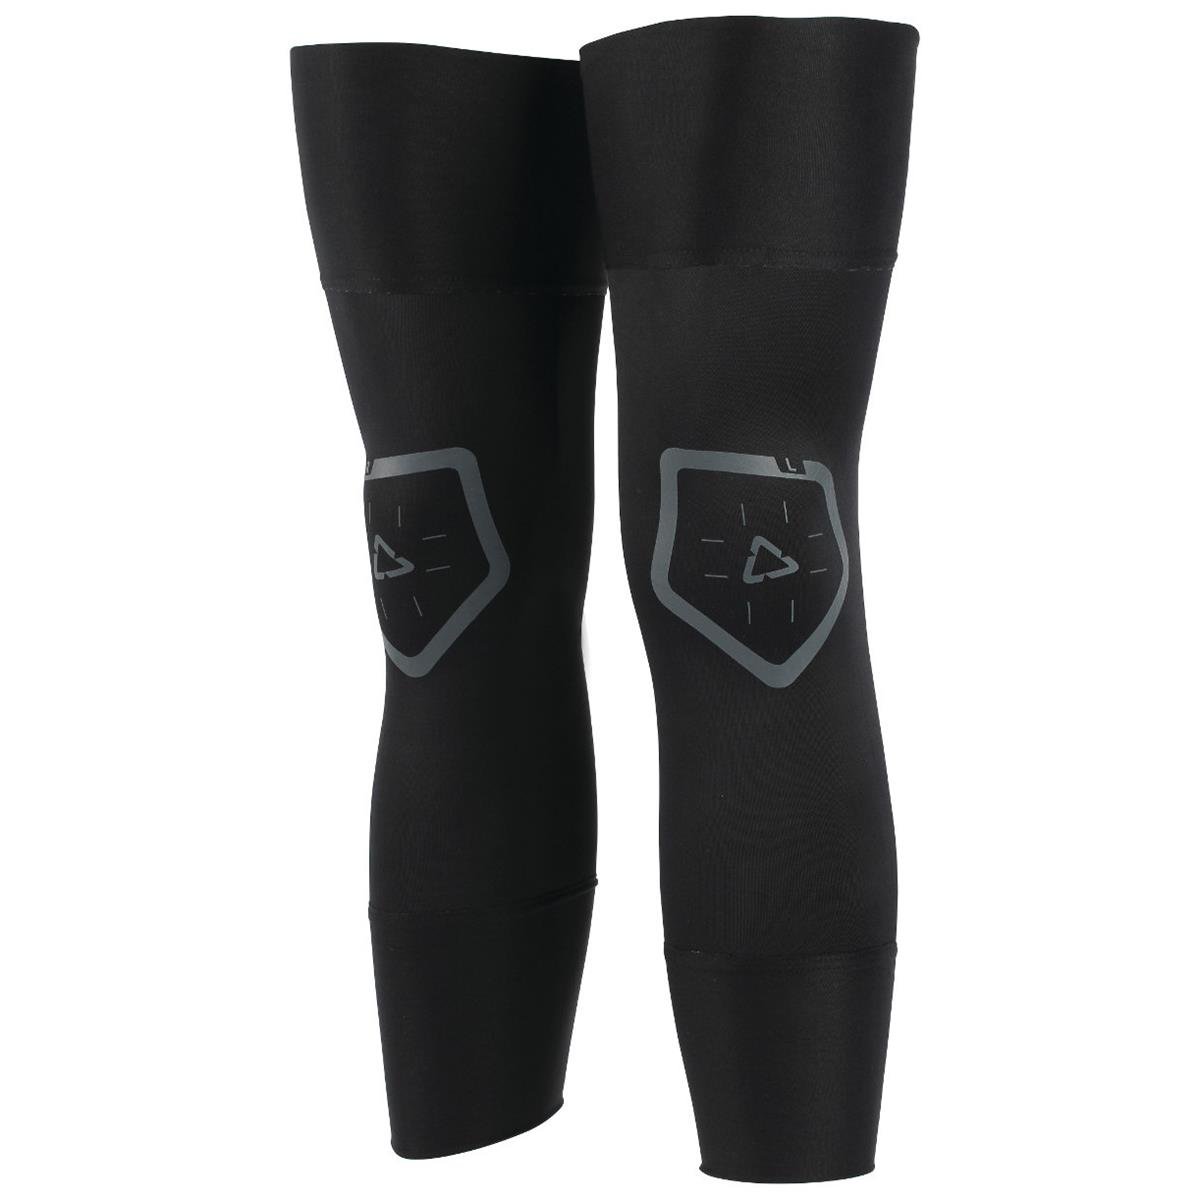 Leatt Knee Brace Sleeve C-Frame Black - Pair